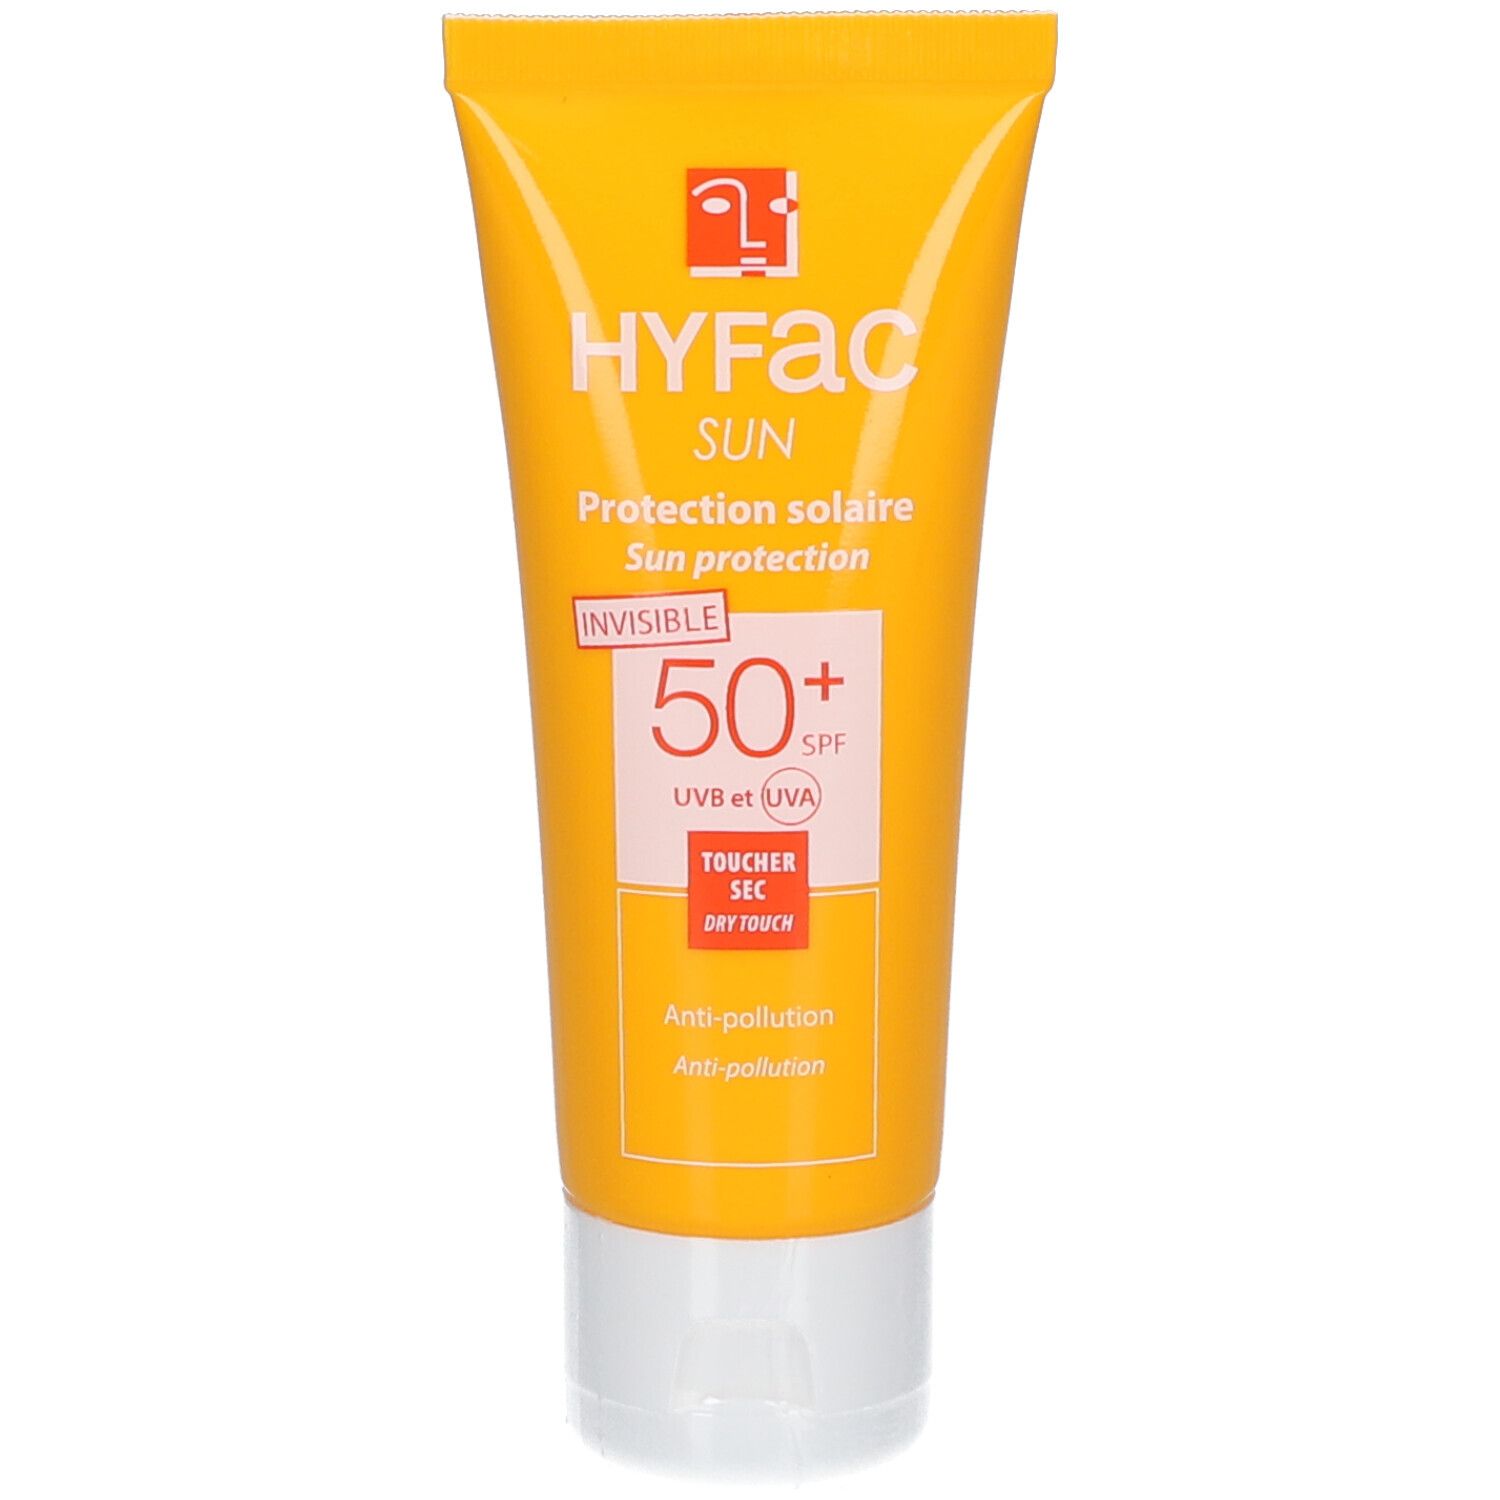 Hyfac Sun Protection solaire invisible Spf50+ anti-pollution